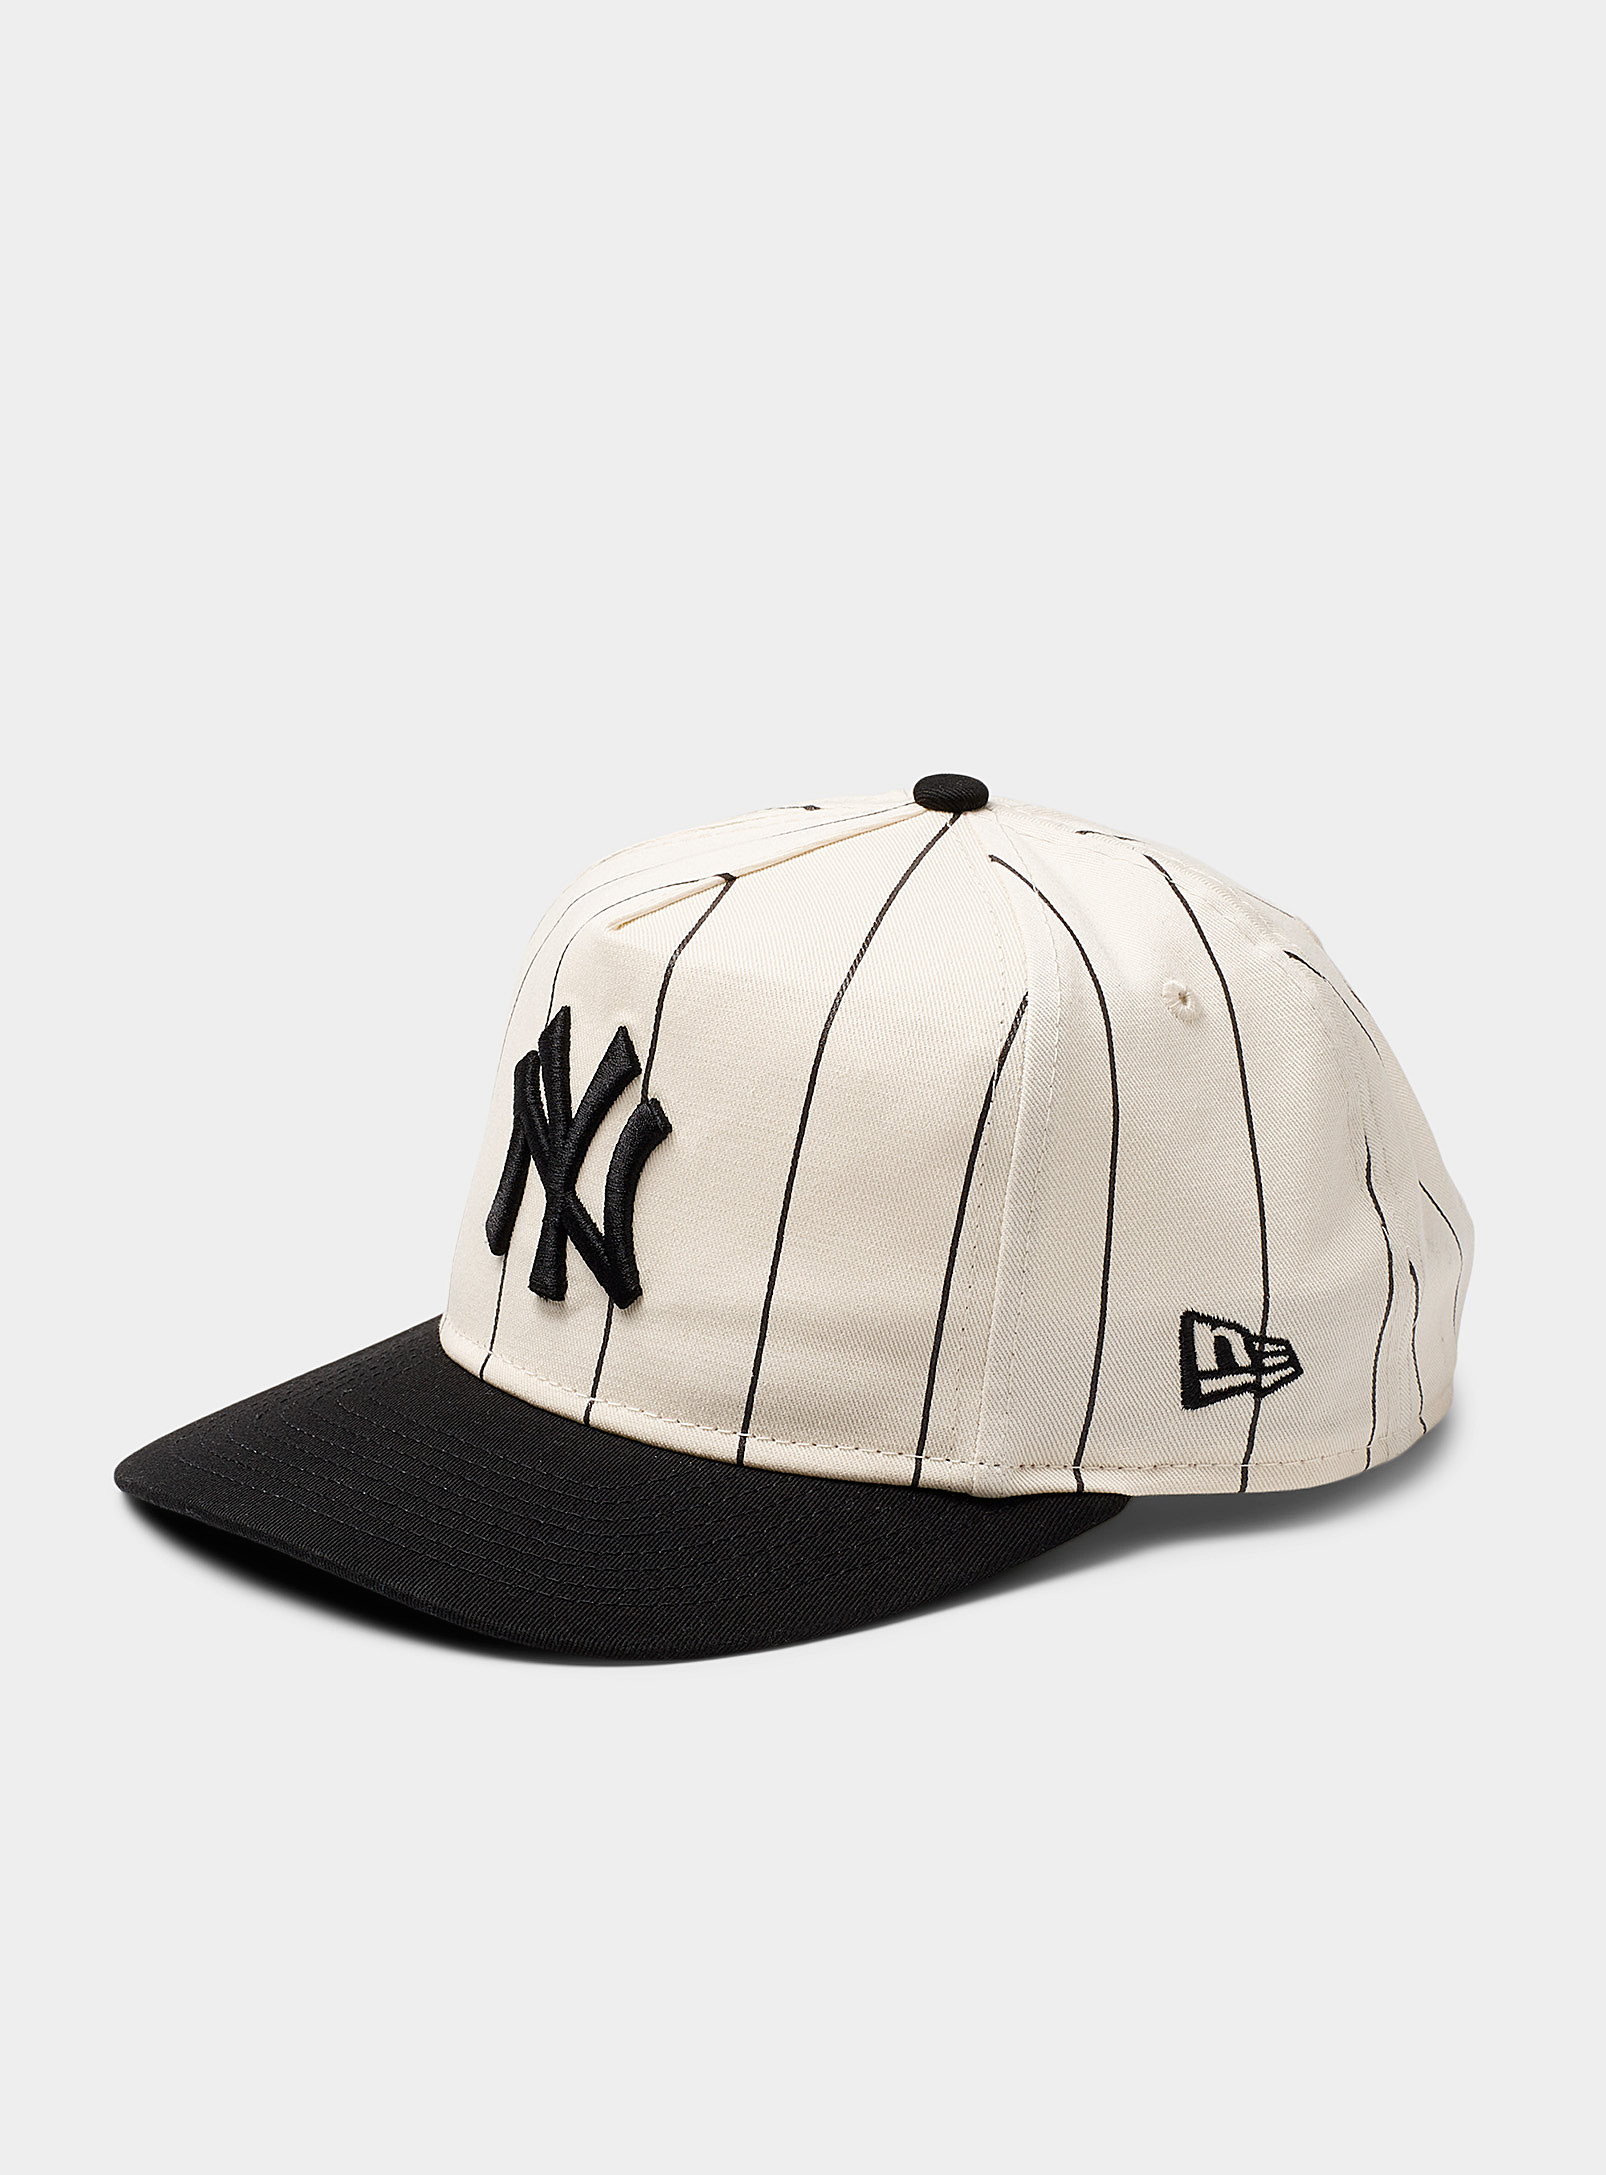 New Era - La casquette baseball Yankees